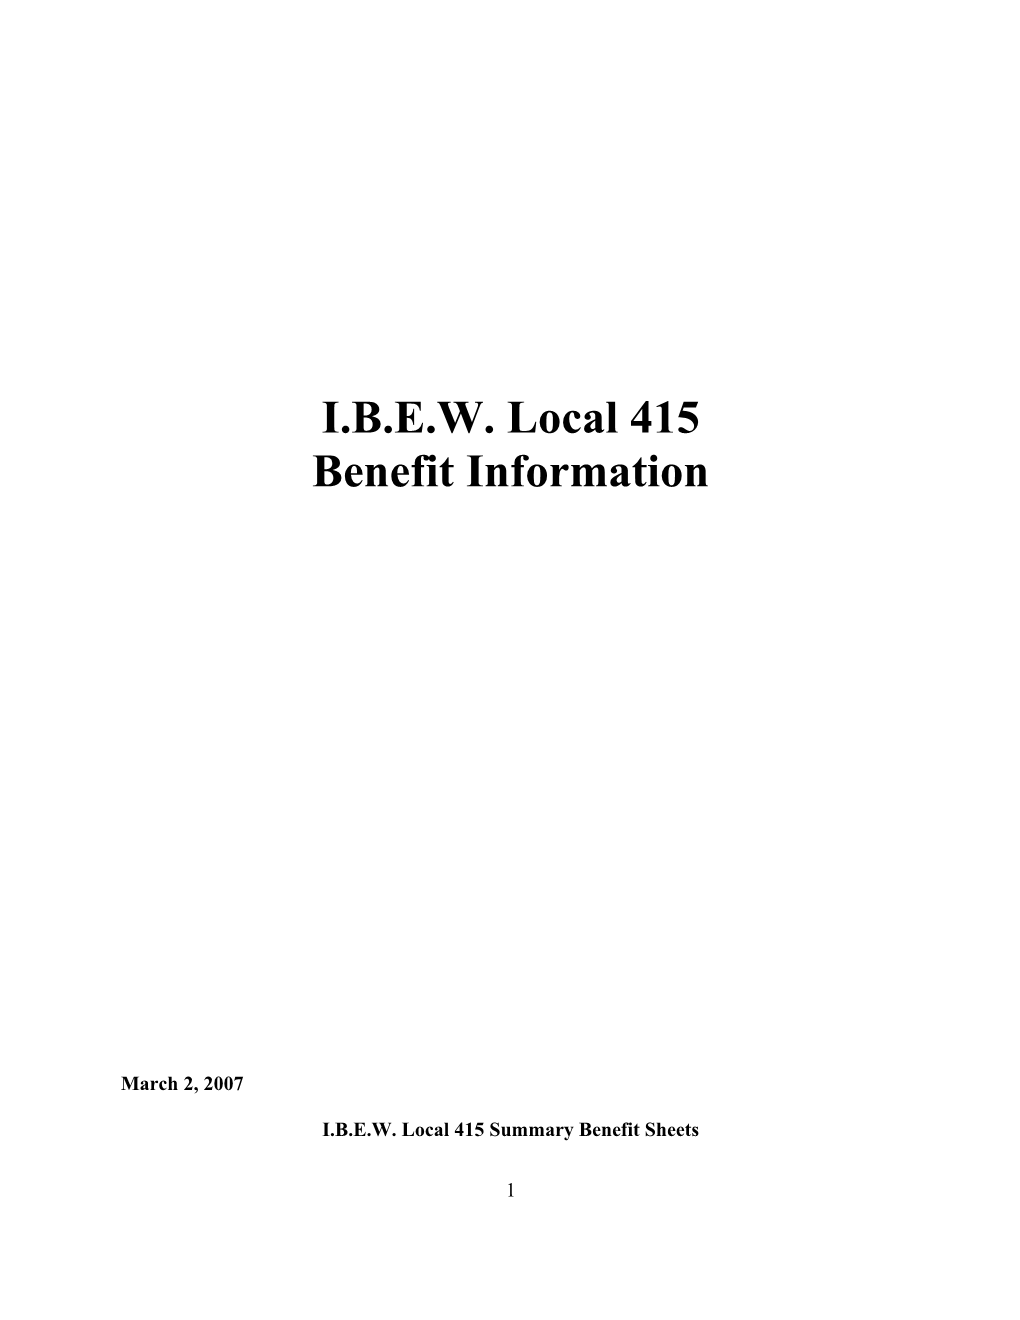 I.B.E.W. Local 415 Summary Benefit Sheets